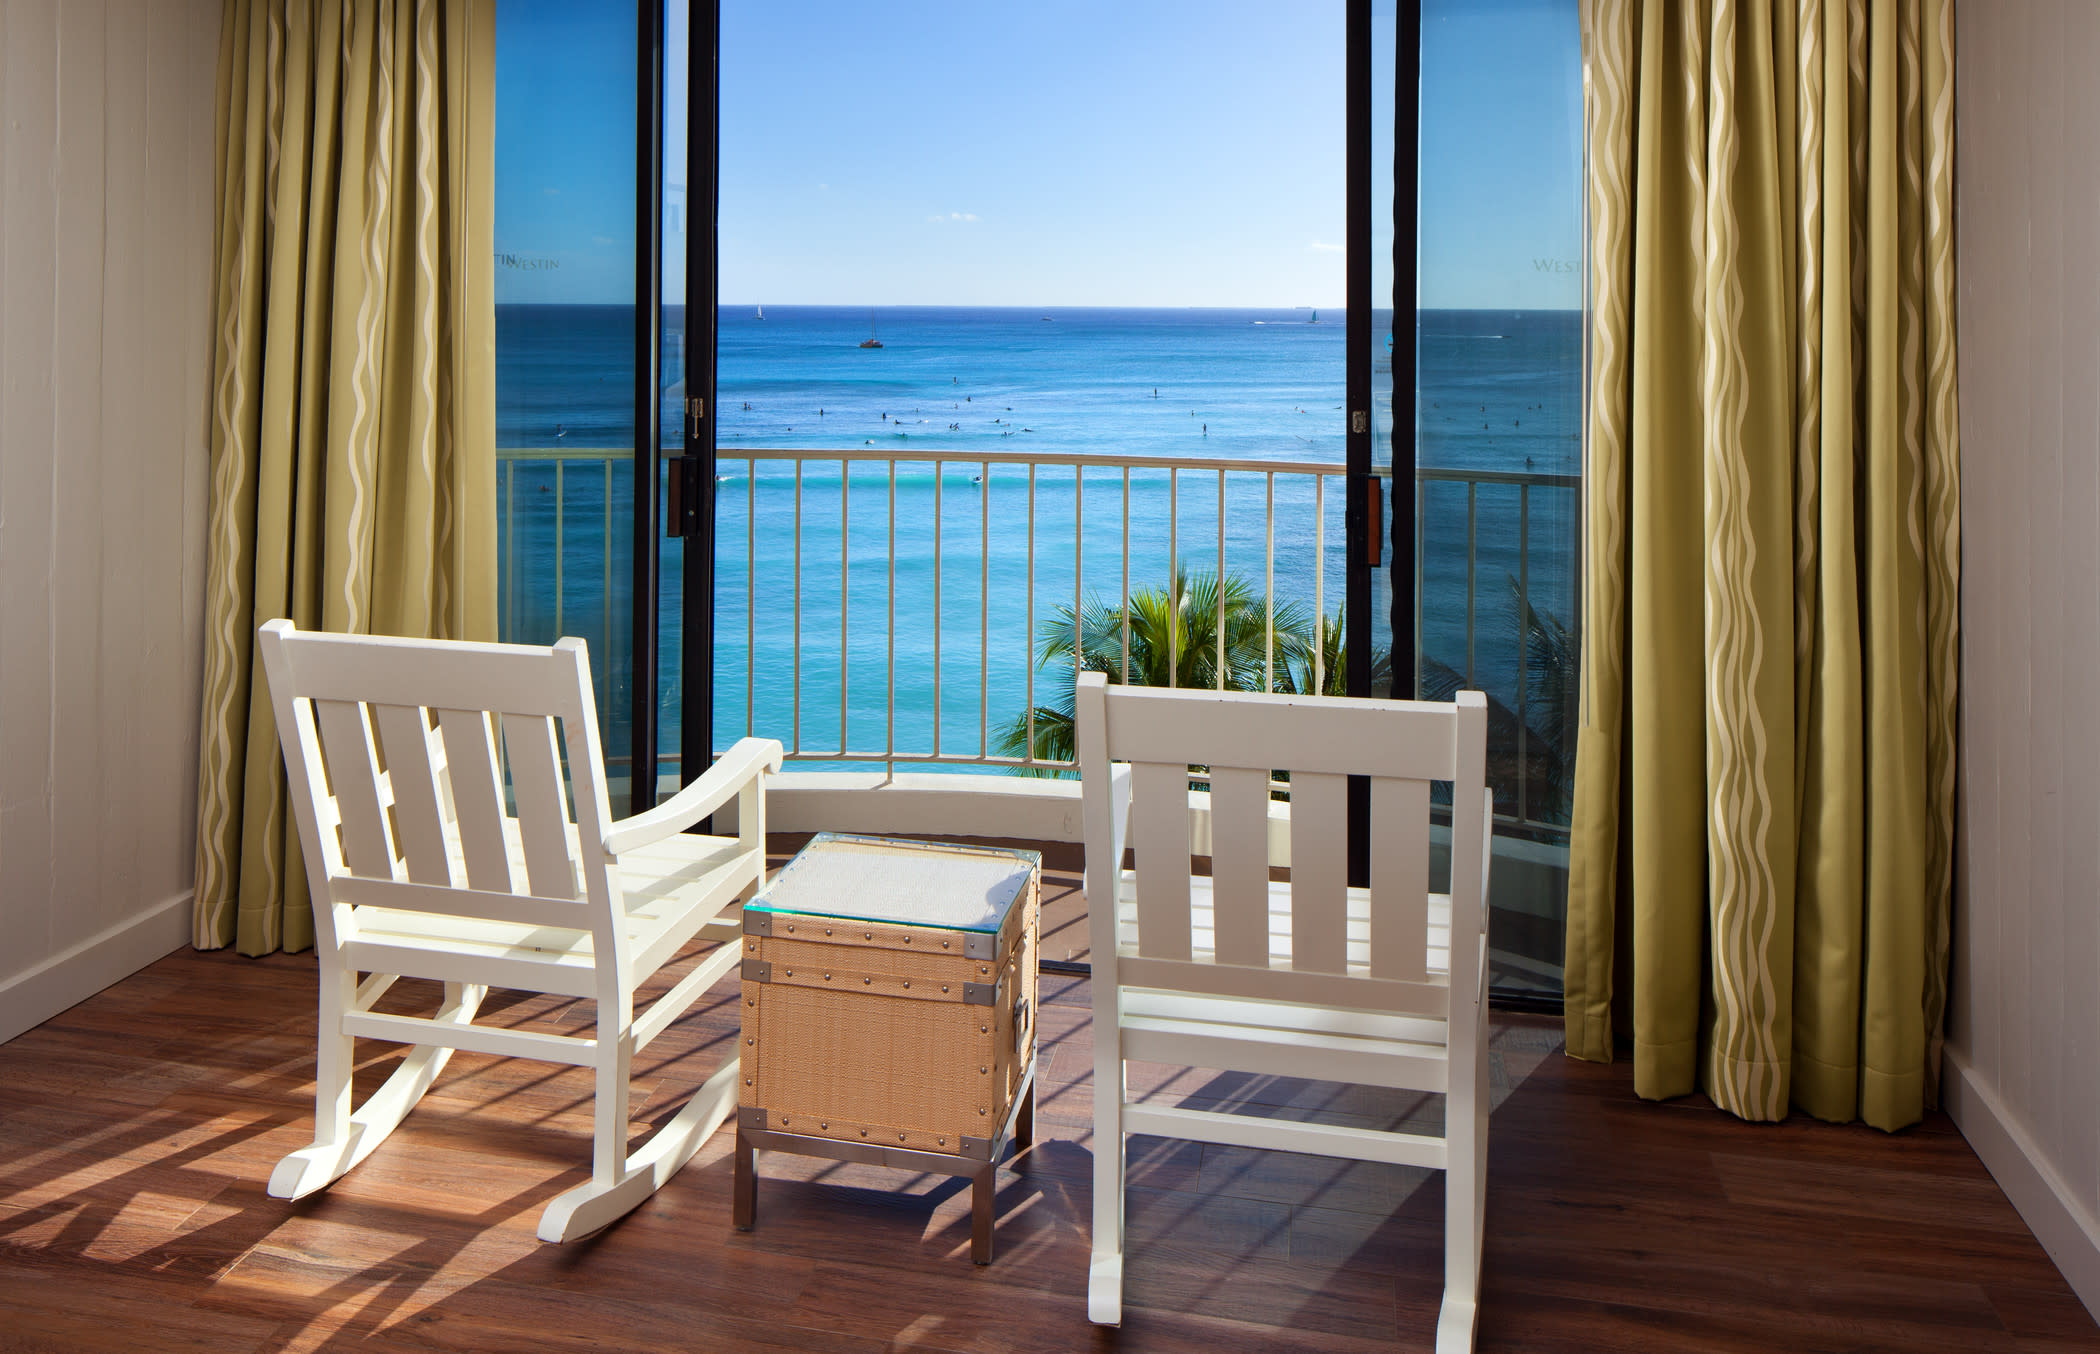 Moana Surfrider, A Westin Resort & Spa, Waikiki Beach a partir de